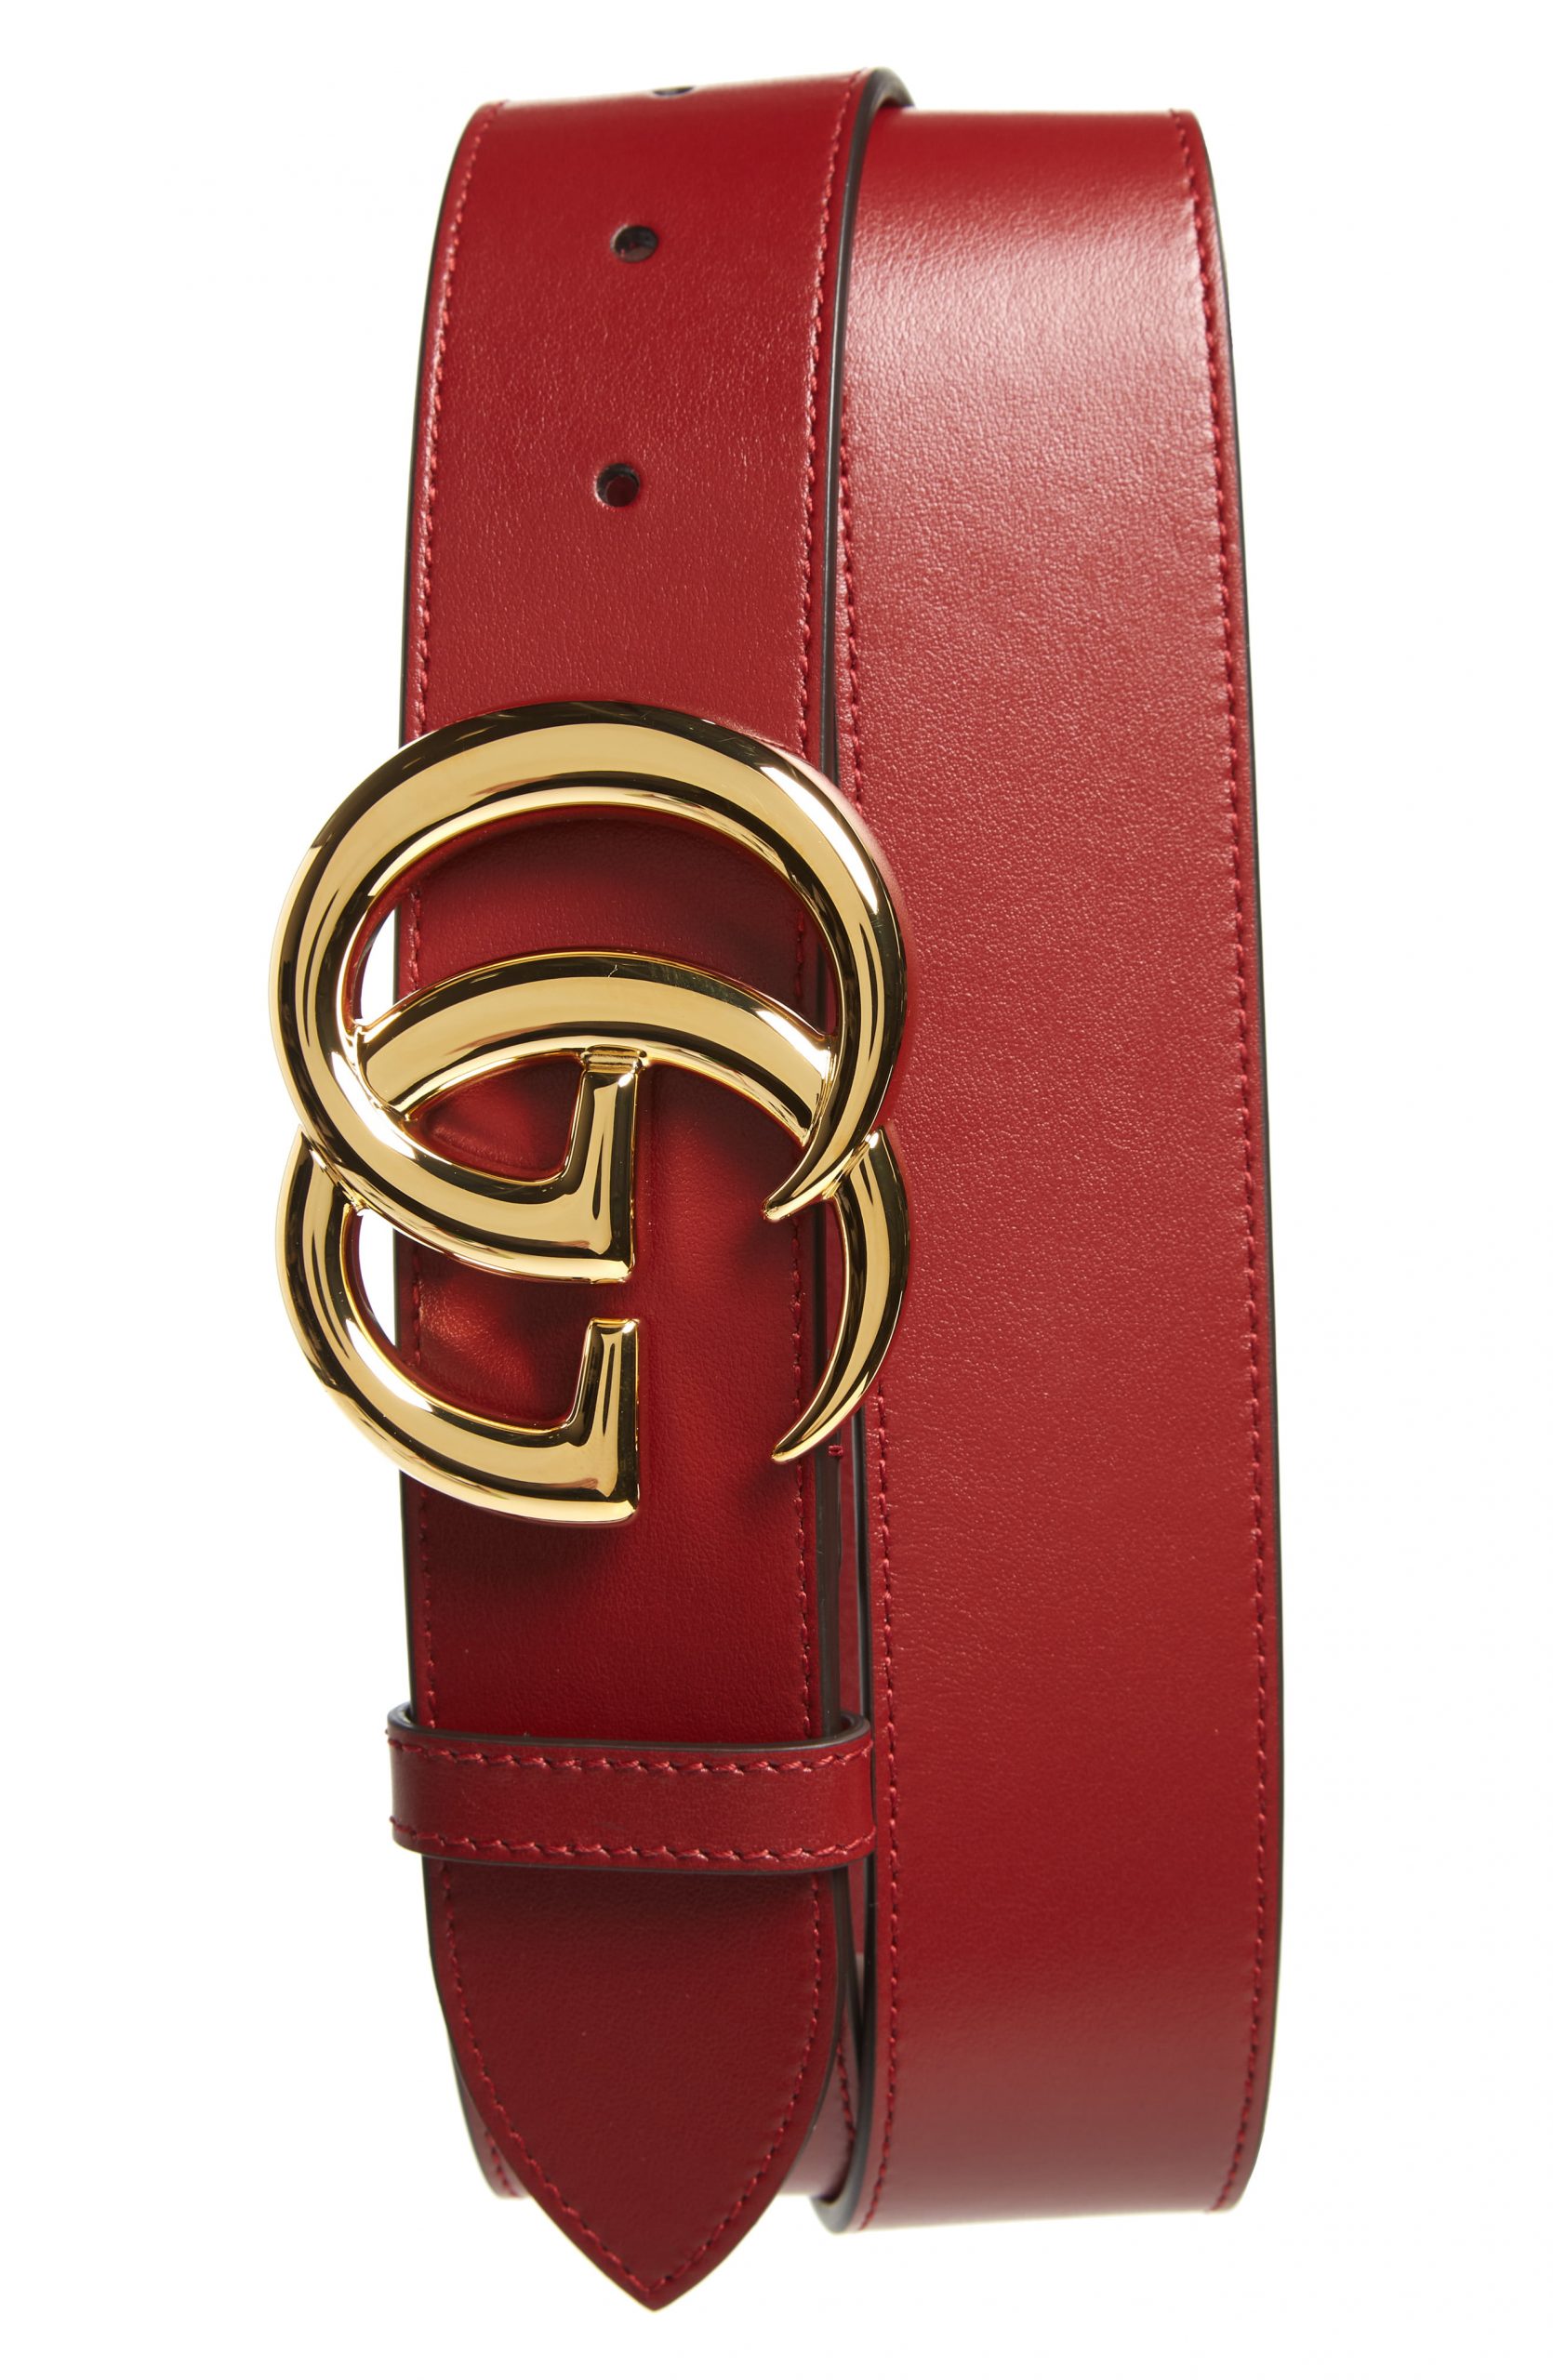 Men’s Gucci Gg Logo Leather Belt, Size 100 EU - Red | The Fashionisto